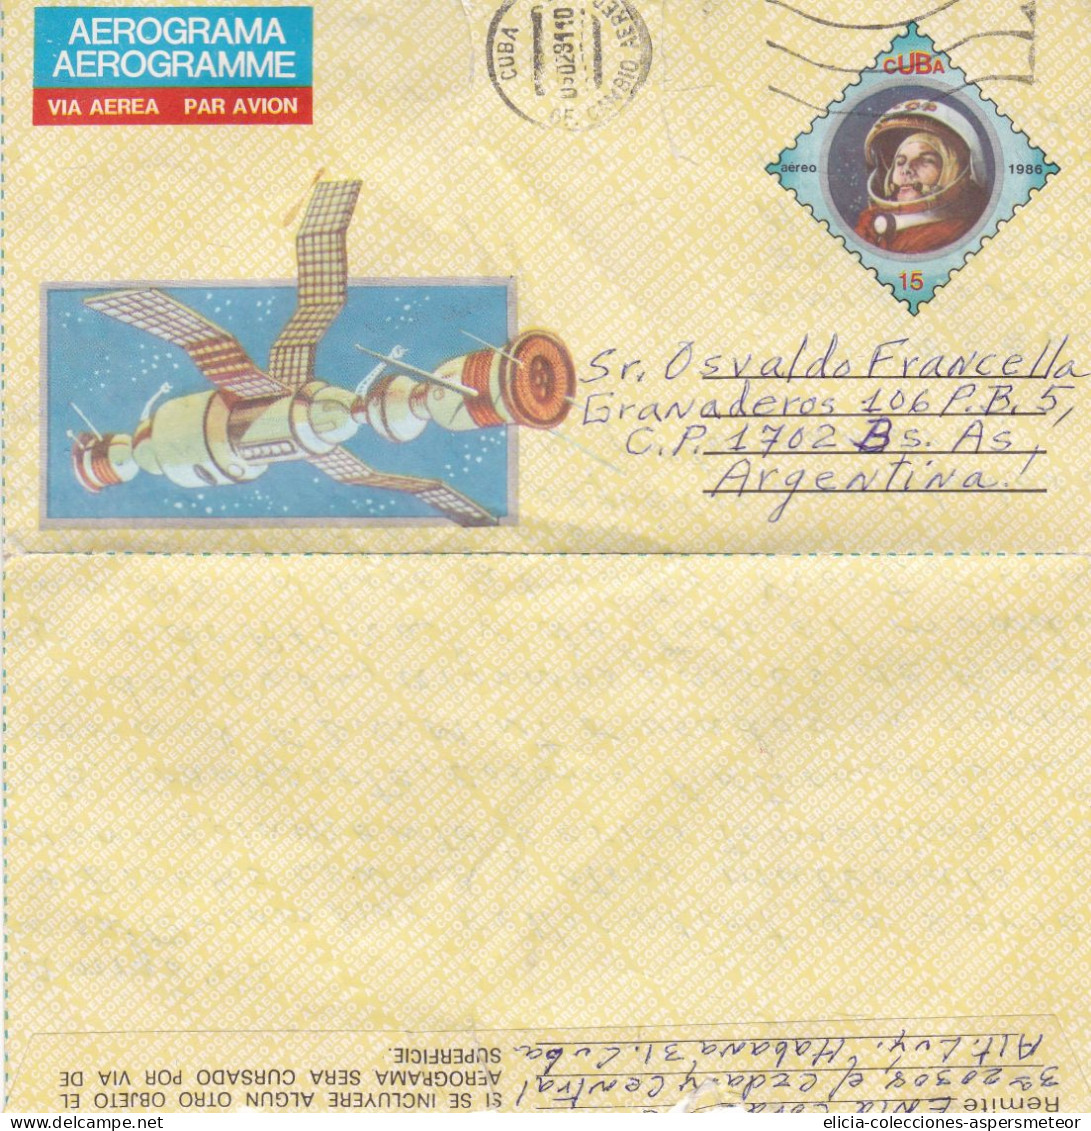 Cuba - 1991 - Aerogramme - La Habana To Argentina - Airmail - Caja 30 - Airmail